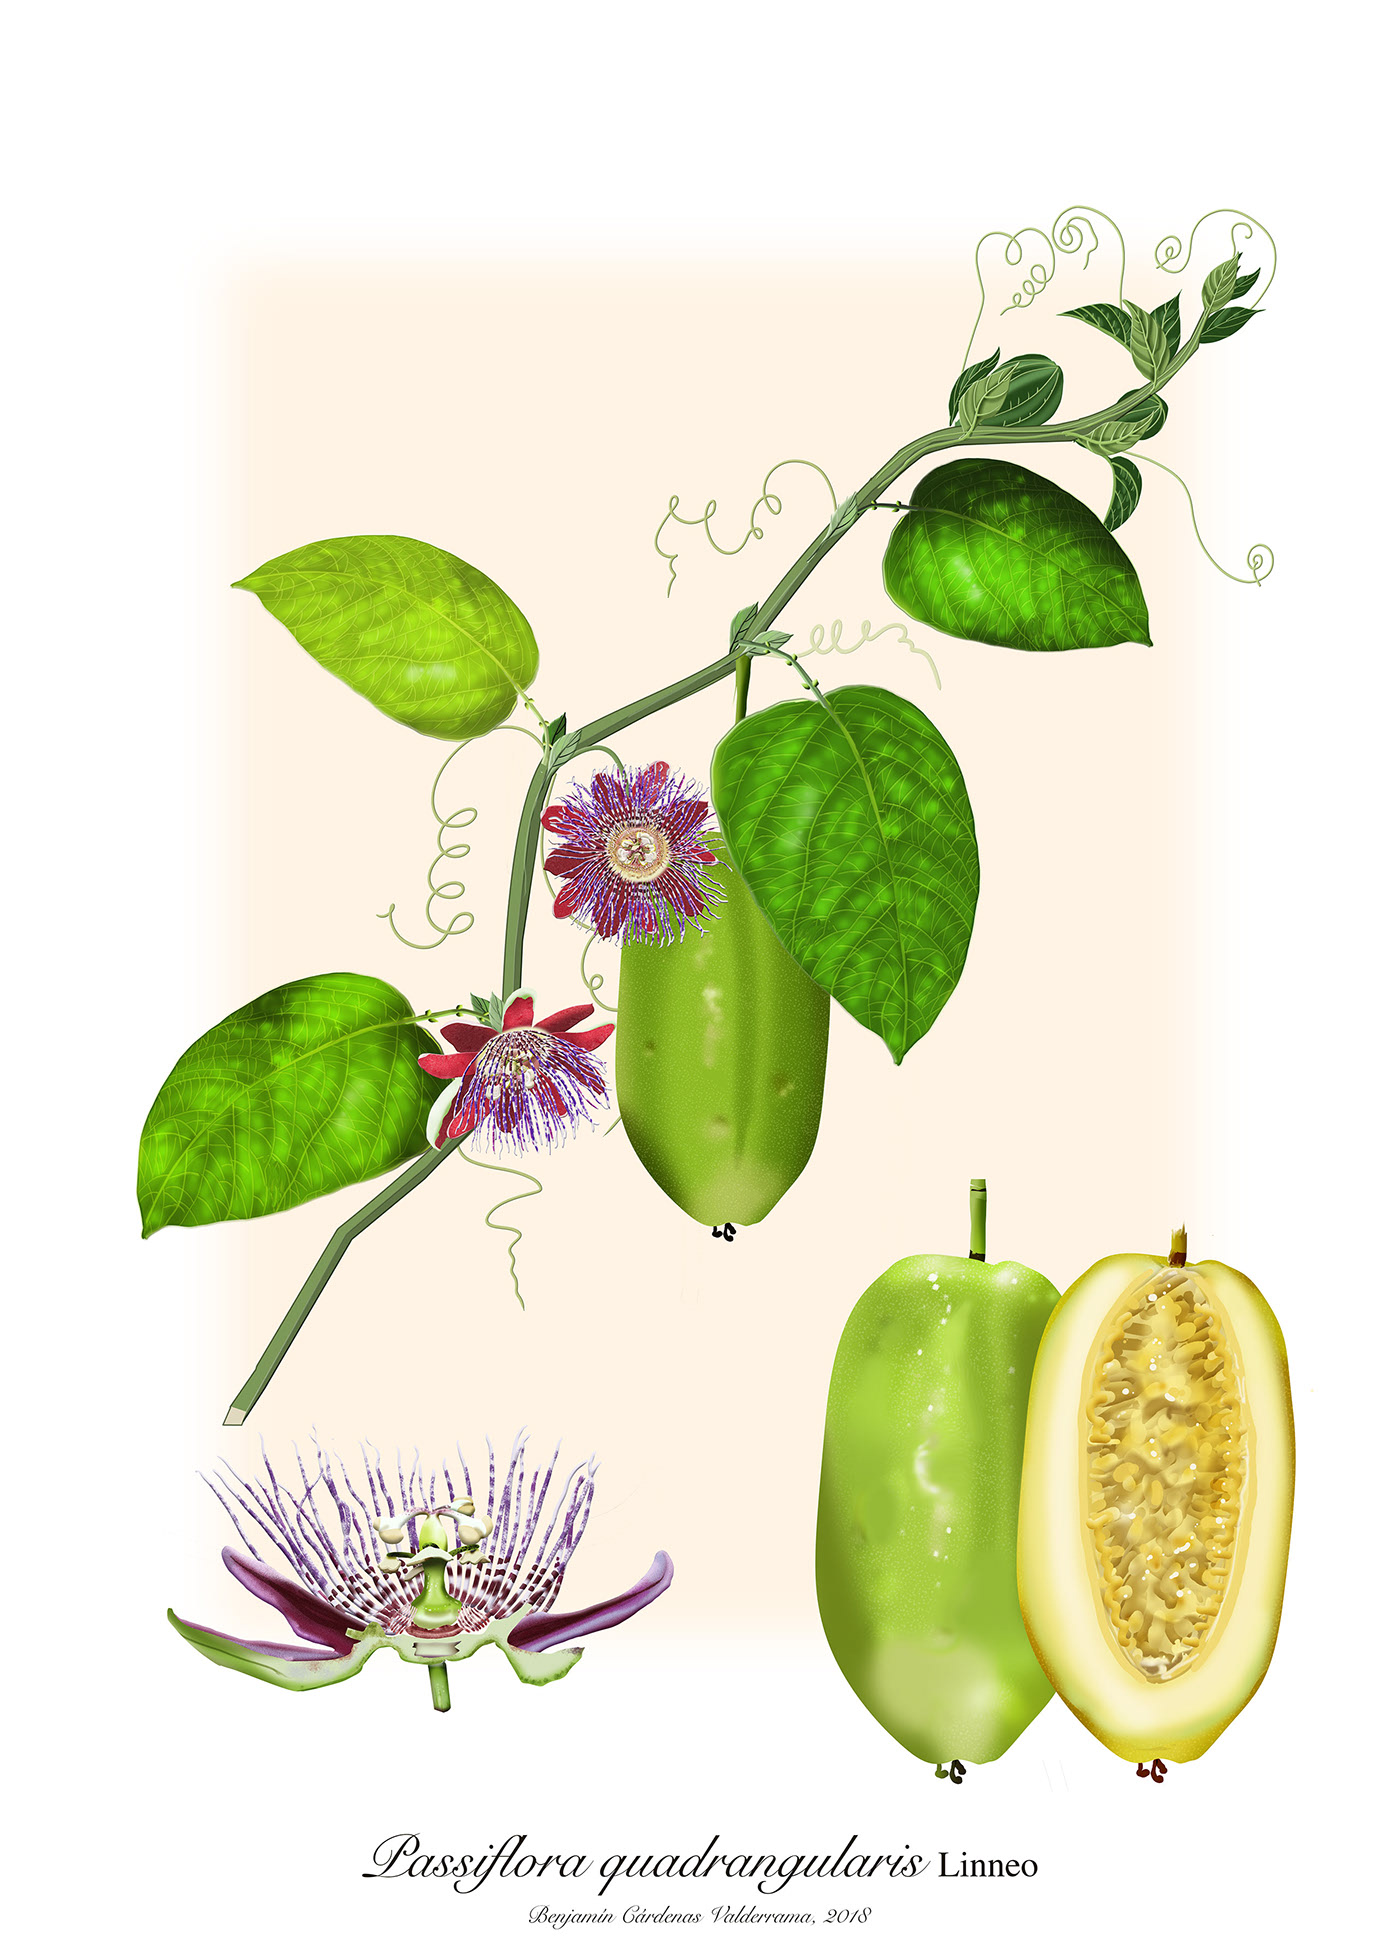 Illustration Passiflora quadrangularis, Par Benjamin Cardenas, via www.behance.net/Benjas 